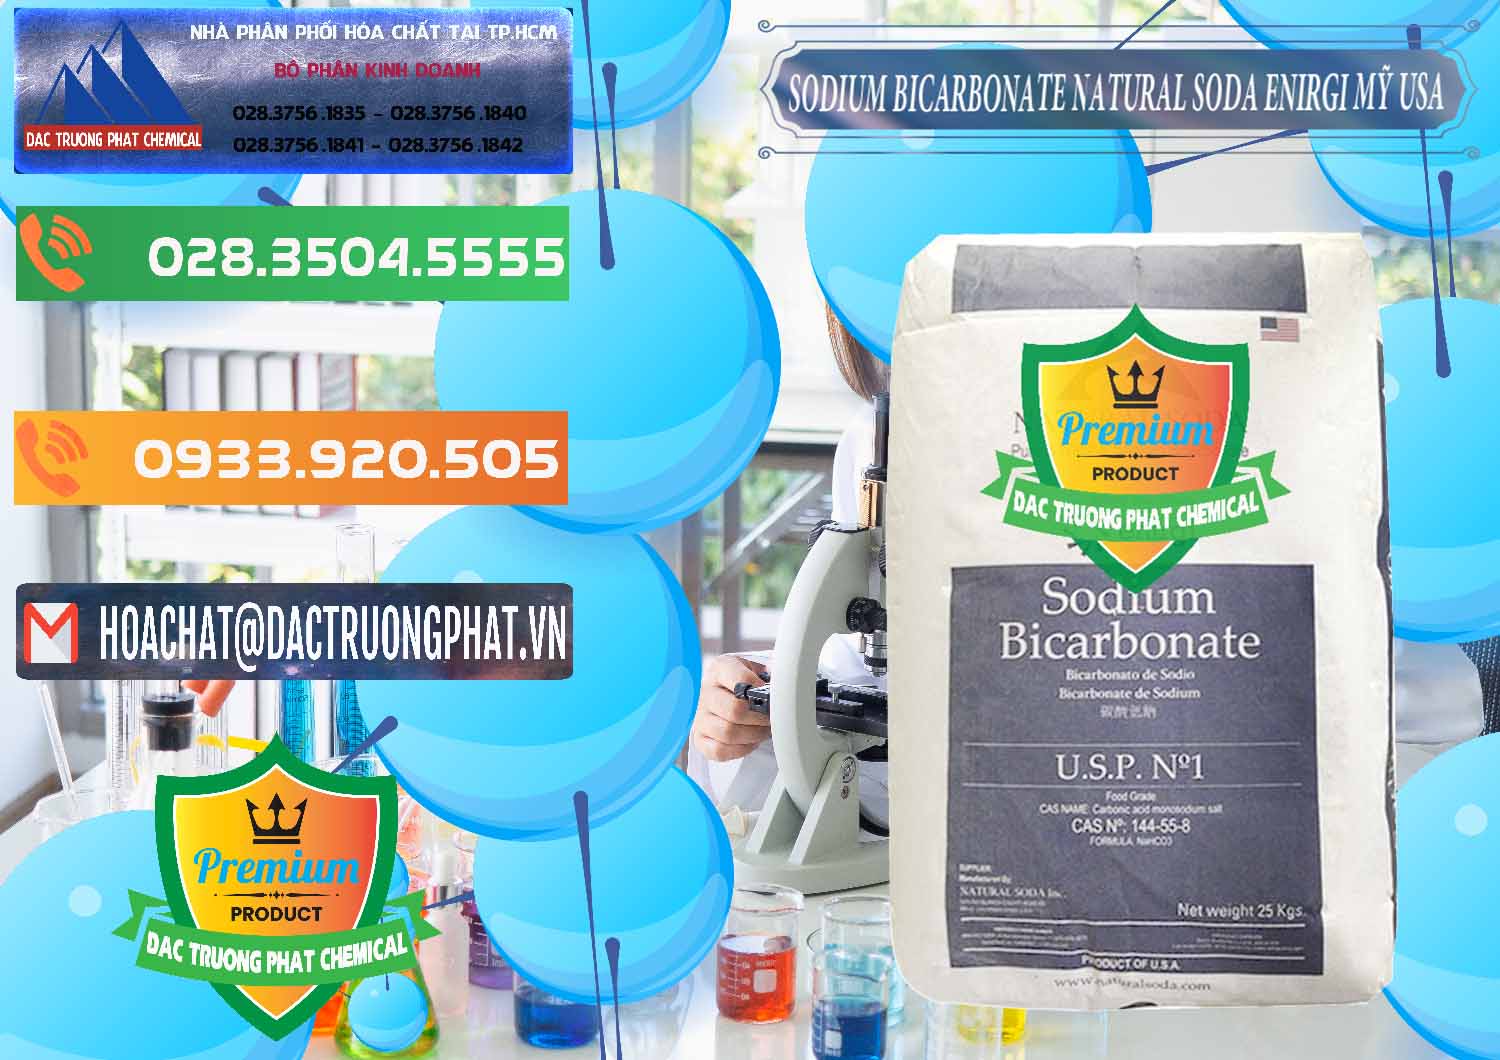 Công ty cung cấp - bán Sodium Bicarbonate – Bicar NaHCO3 Food Grade Natural Soda Enirgi Mỹ USA - 0257 - Công ty chuyên cung cấp & bán hóa chất tại TP.HCM - hoachatxulynuoc.com.vn